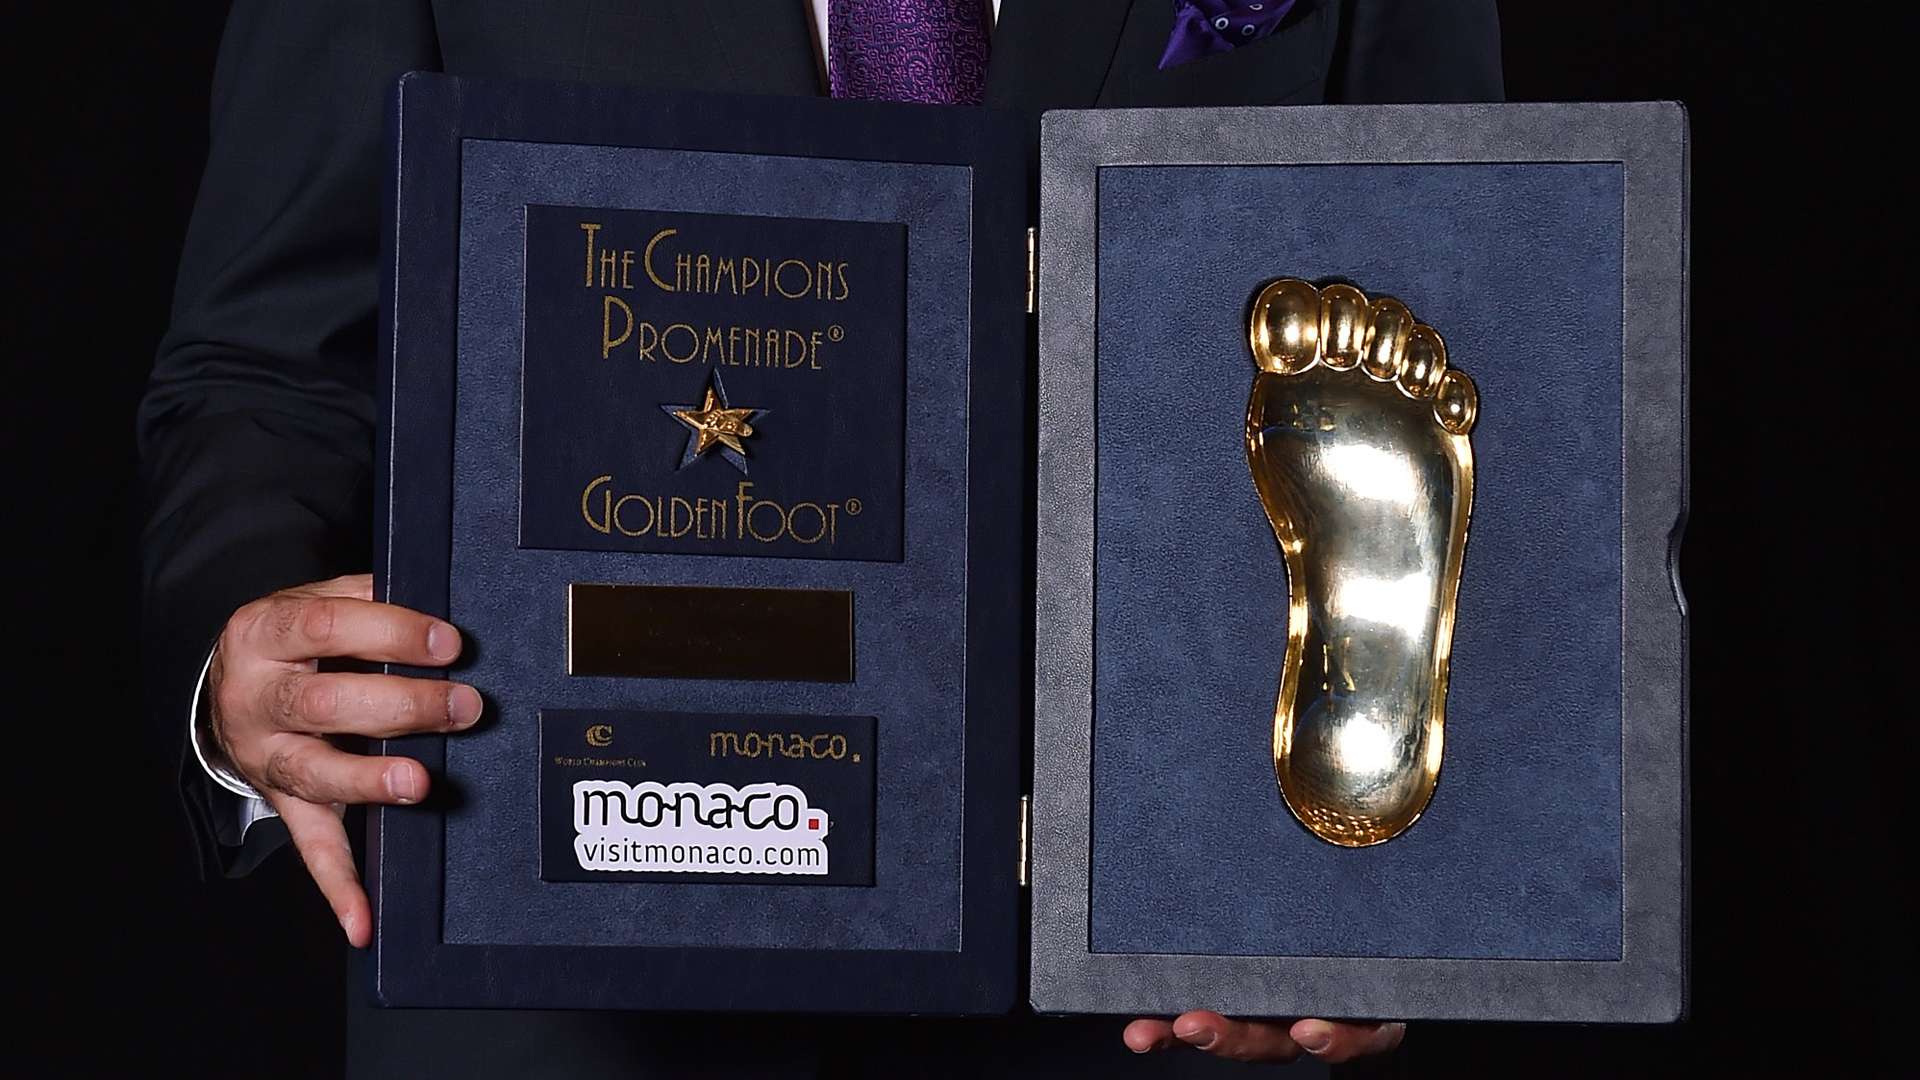 the Golden Foot Award trophy